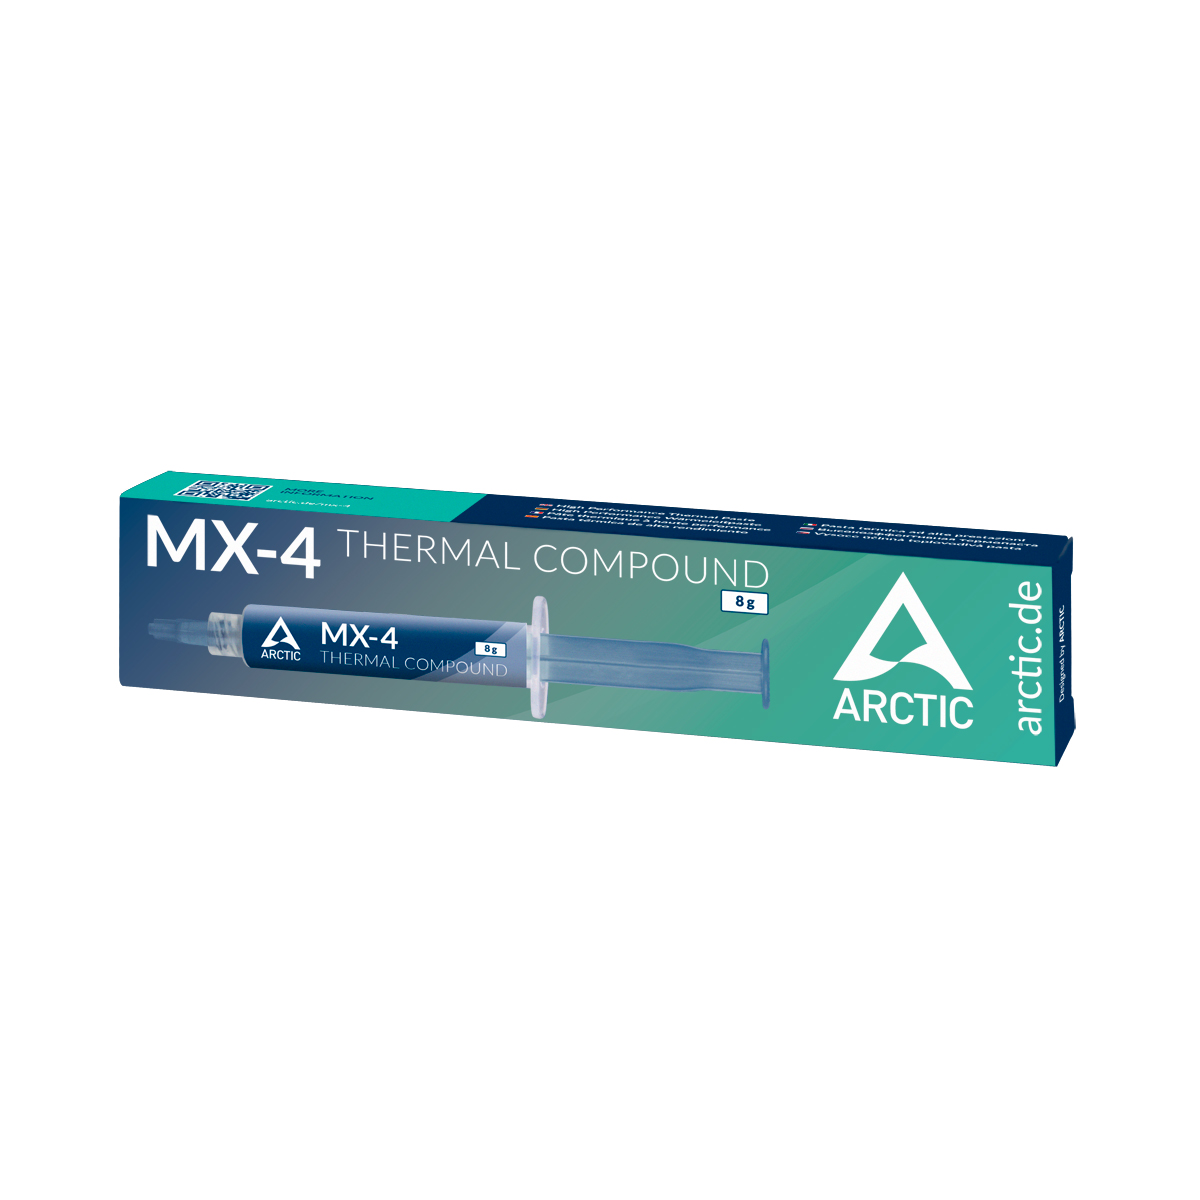 Pate Thermique Arctic Mx-4 (8G) Actcp00008b